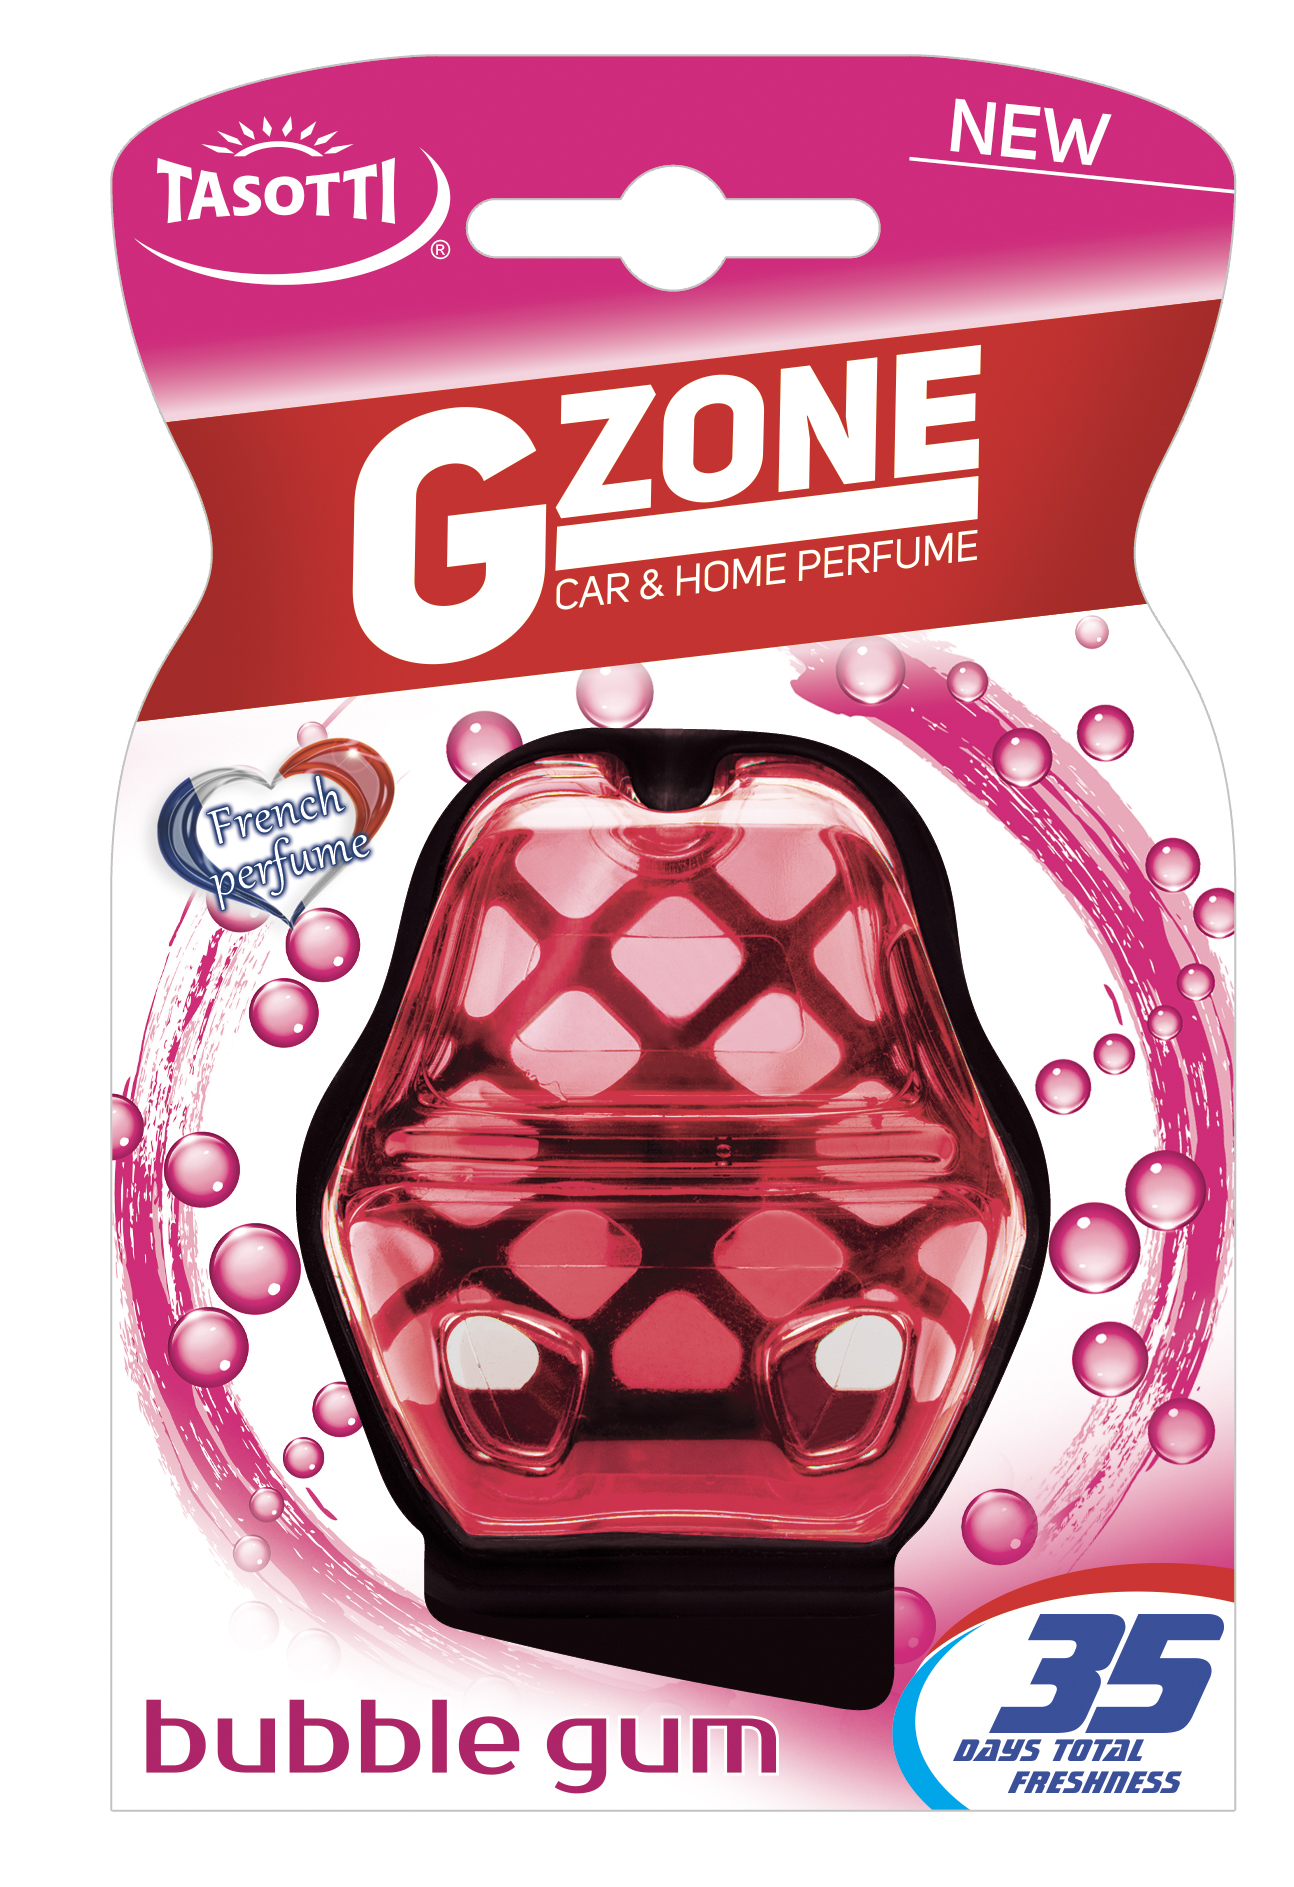 GZone - Bubble gum